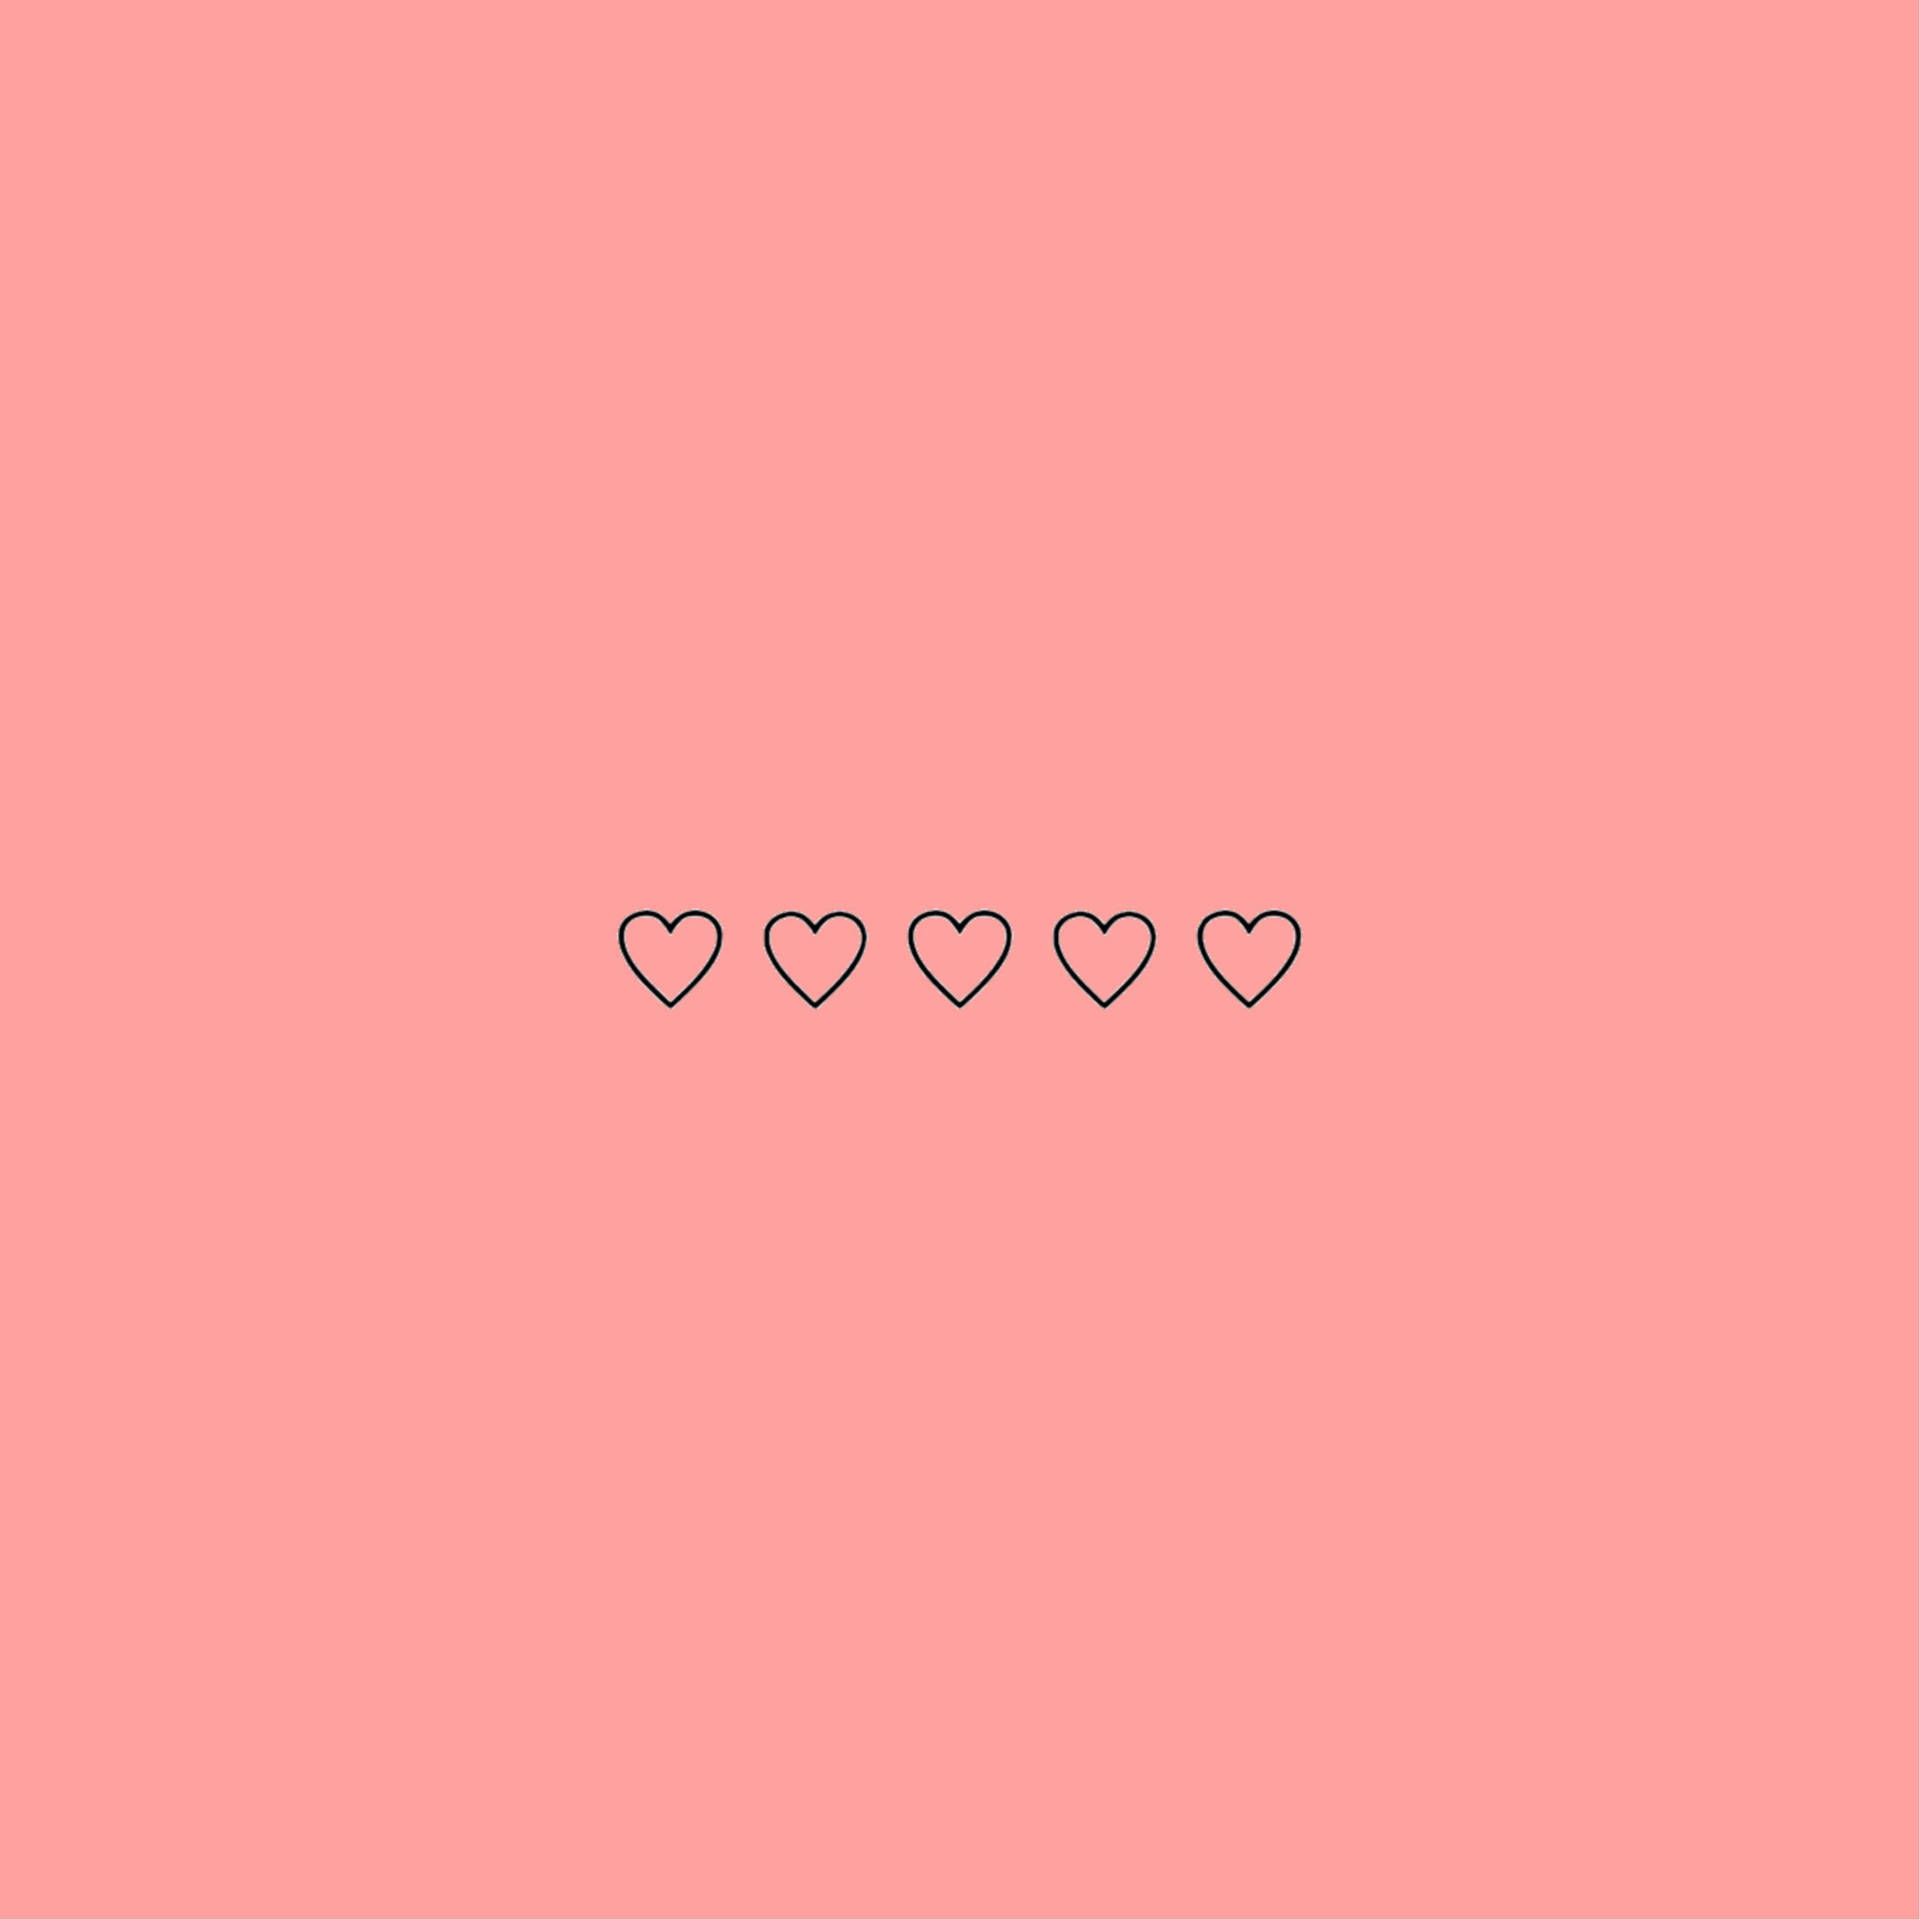 Minimalist Pastel Pink Heart Aesthetic